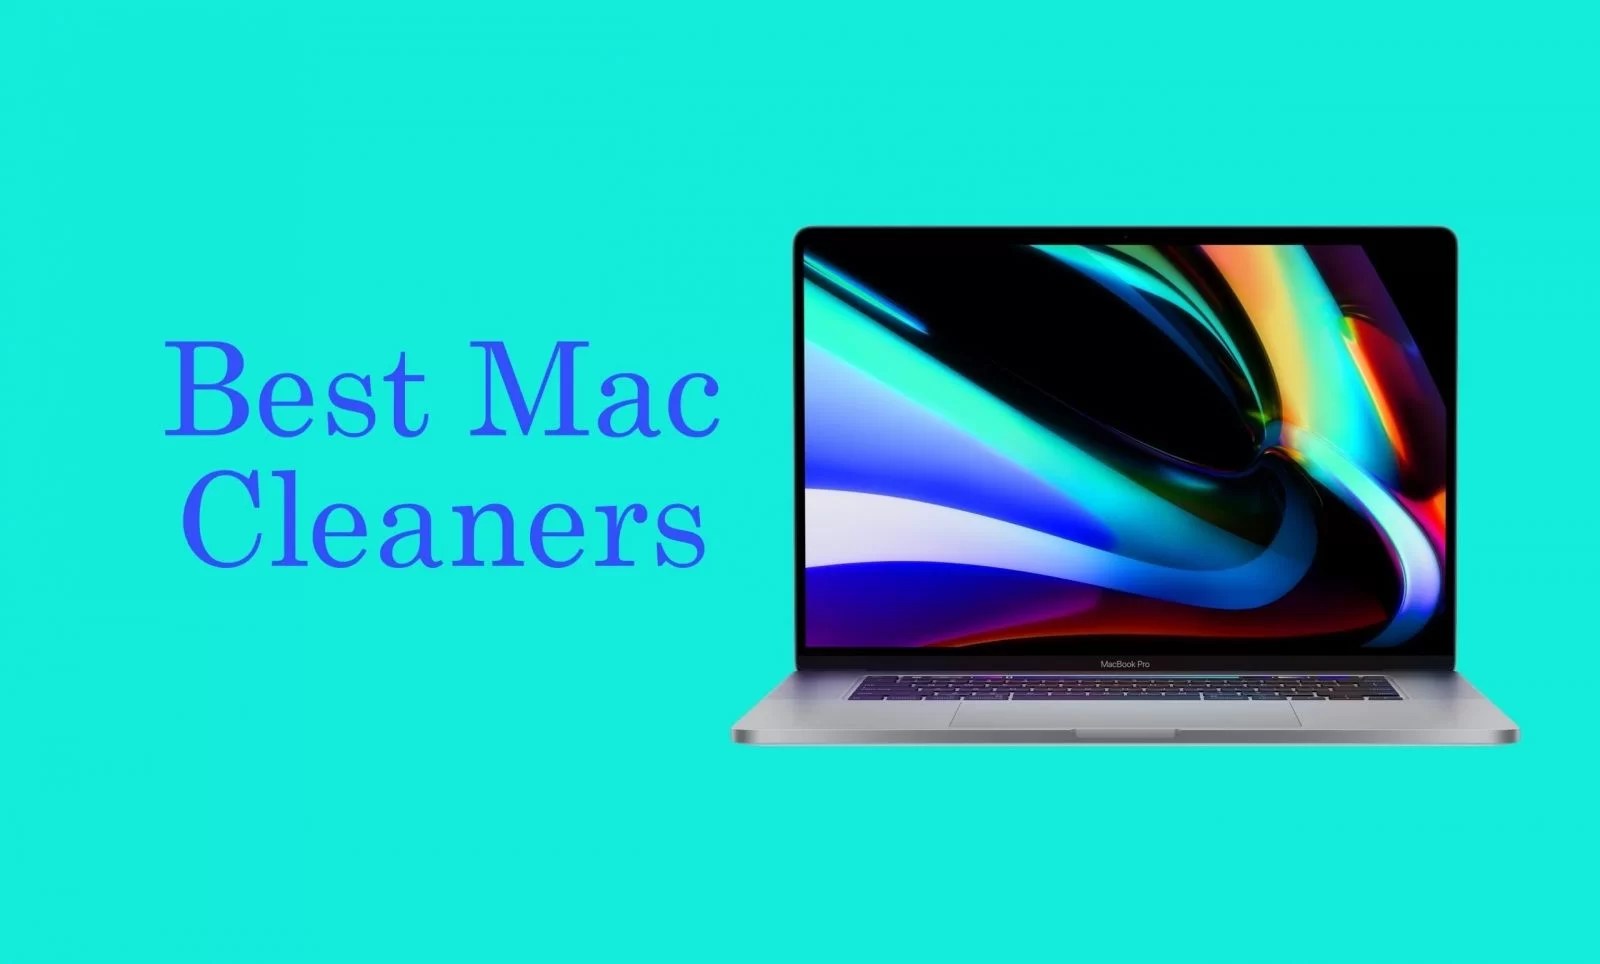 disk cleaner mac reddit